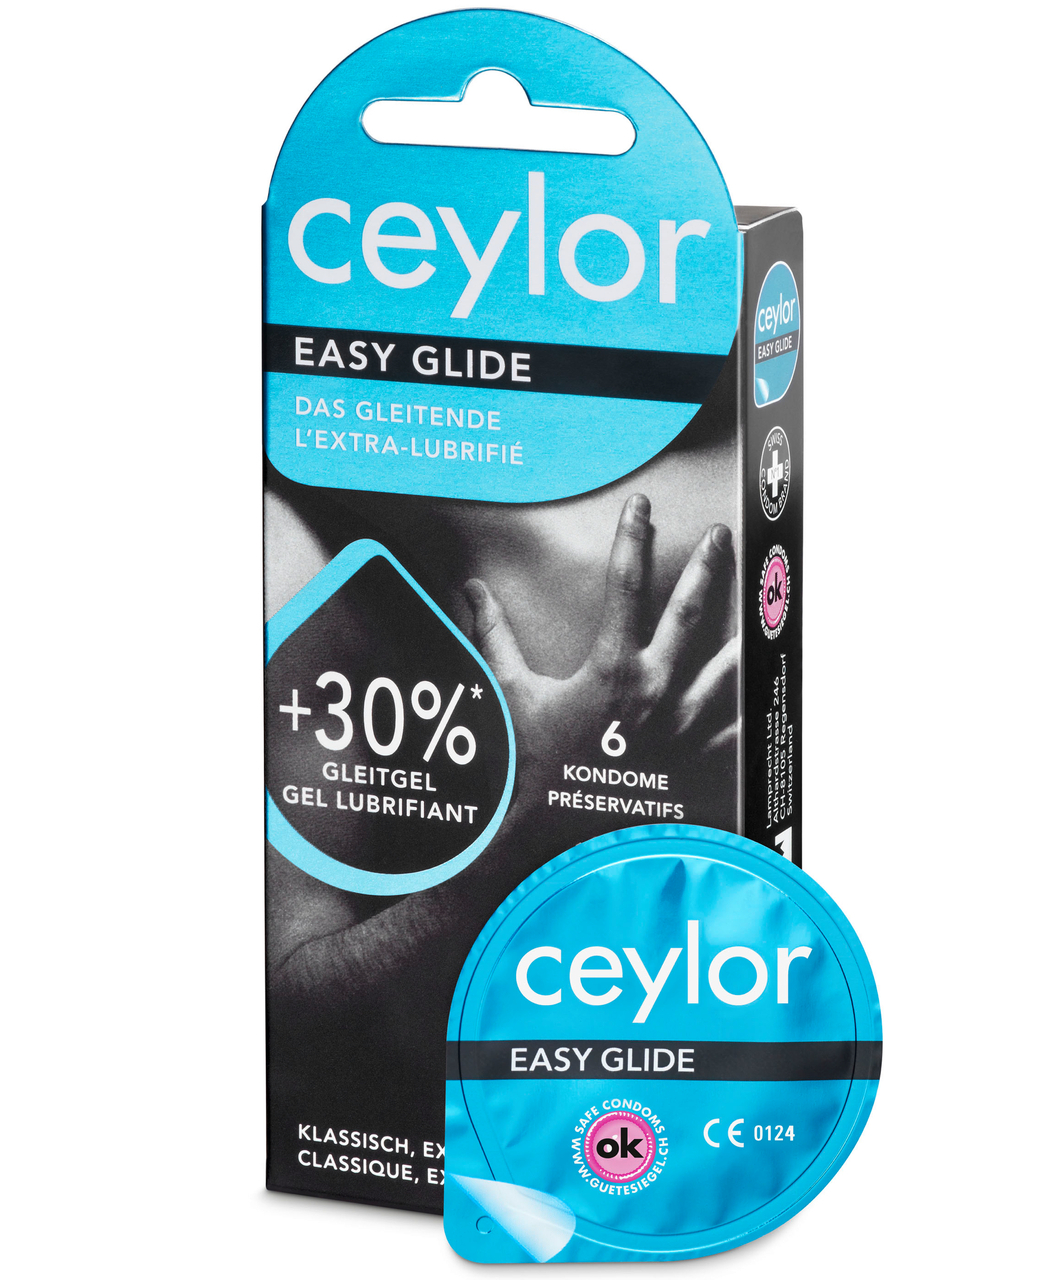 Ceylor Easy Glide презервативы (6 шт.)